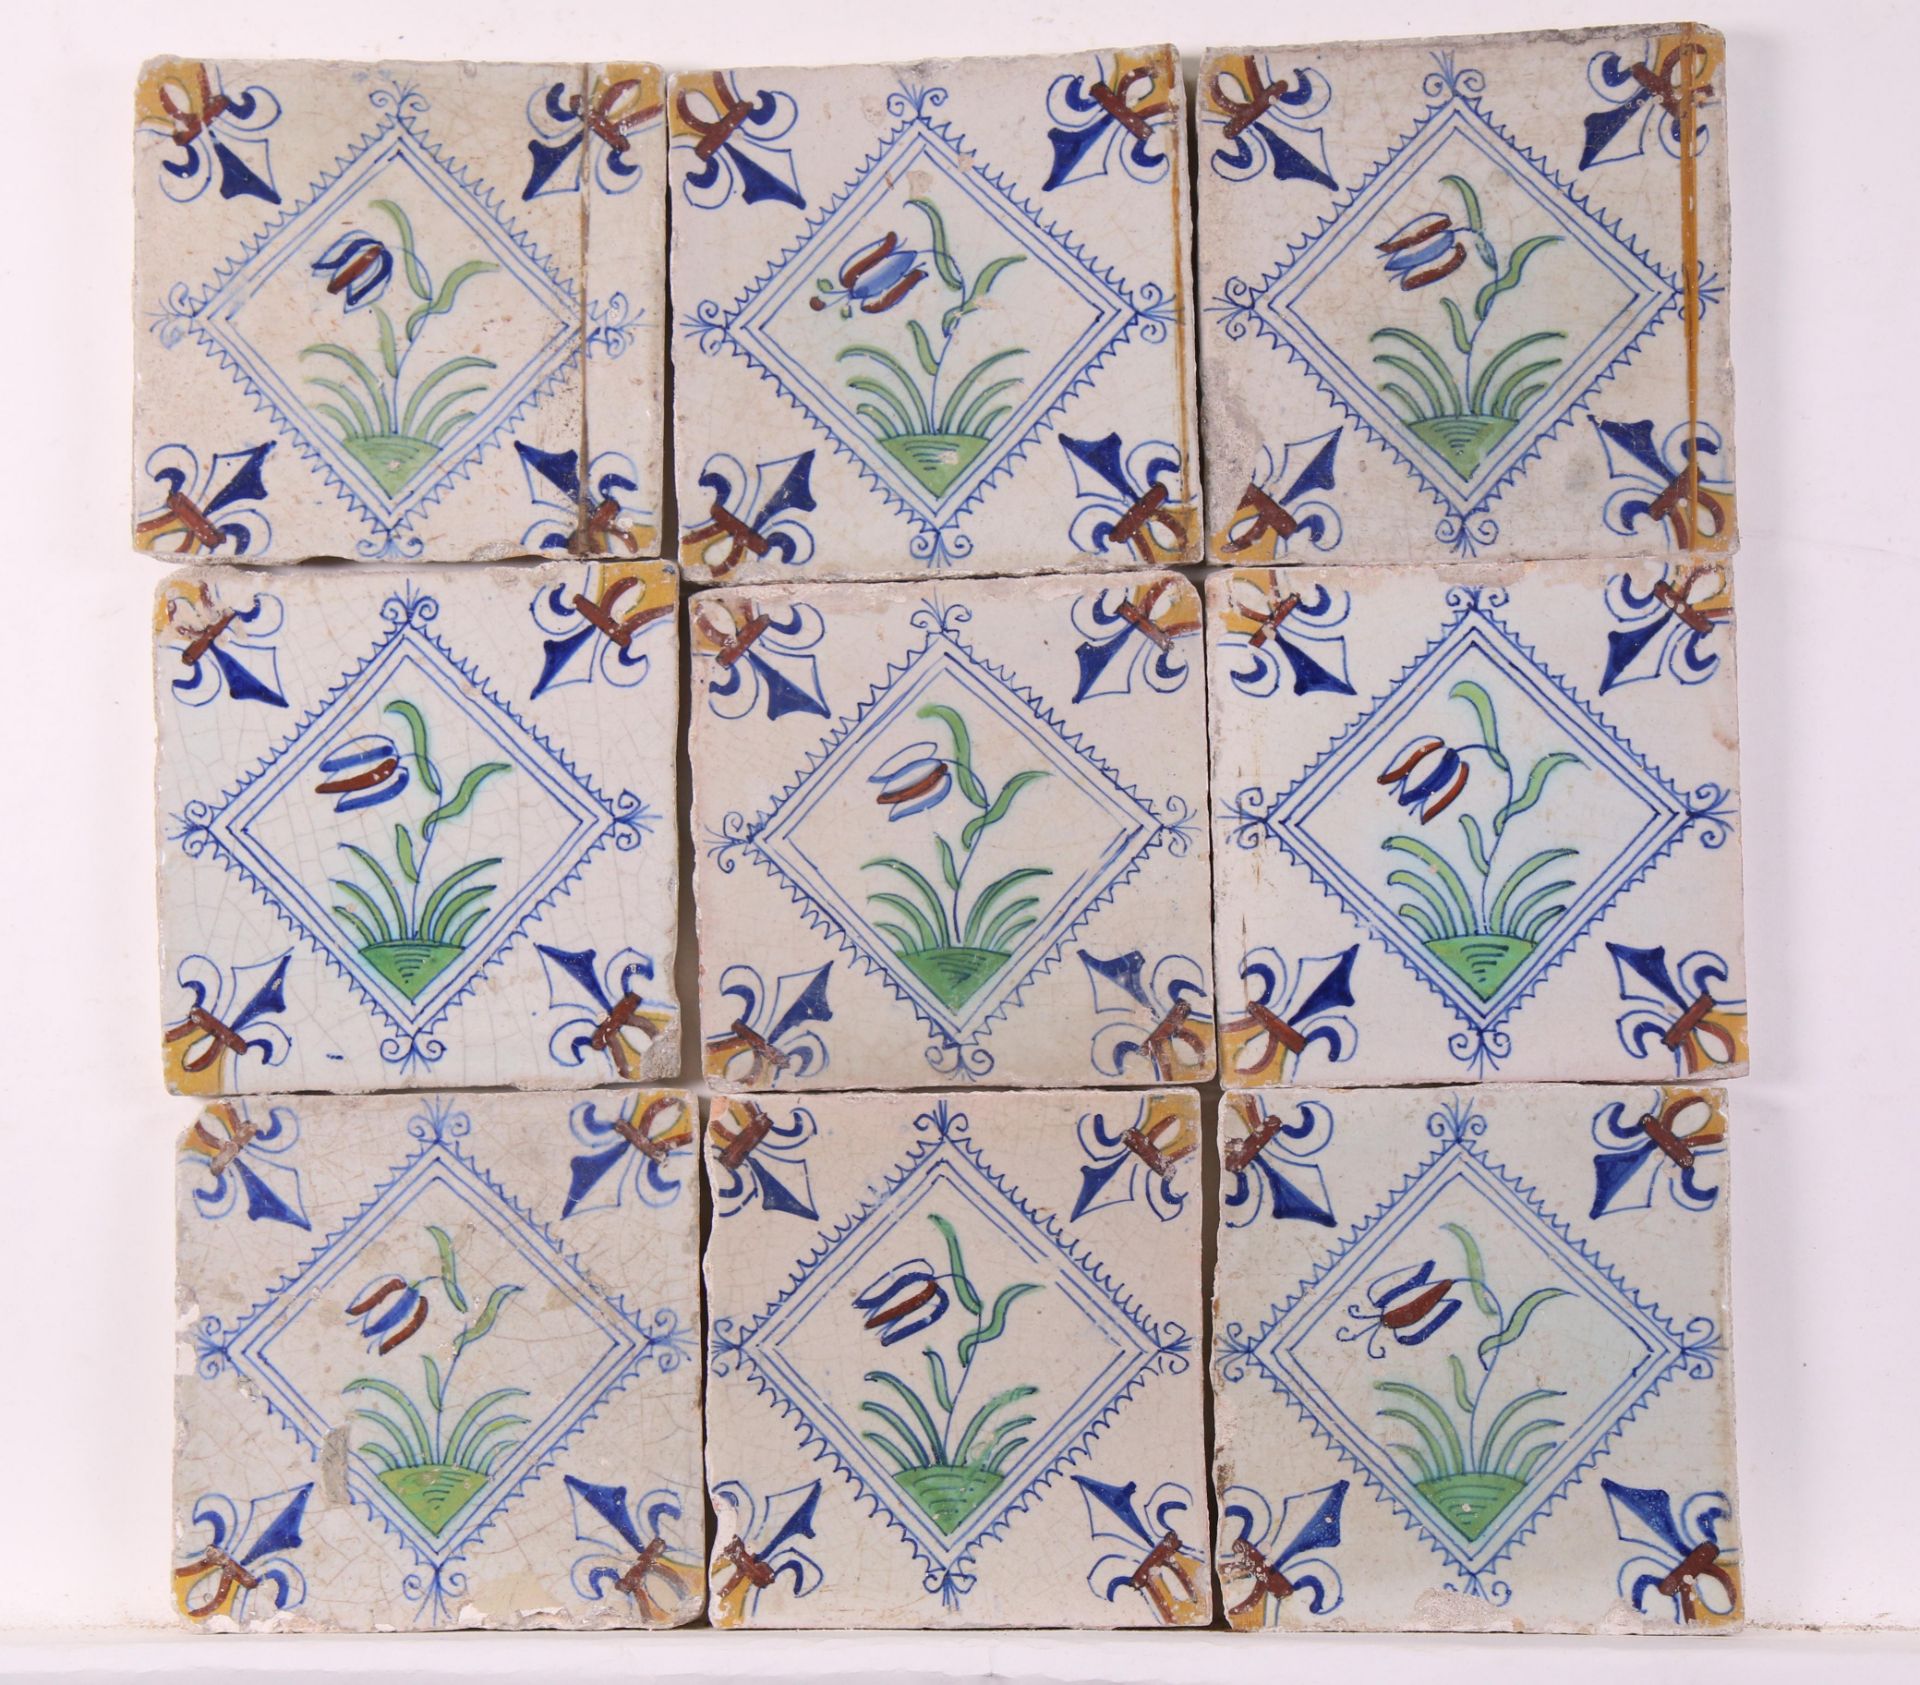 Negen polychroom aardewerk bloemendecor in gekarteld kwadraat tegels, ca. 1620 - 1650;